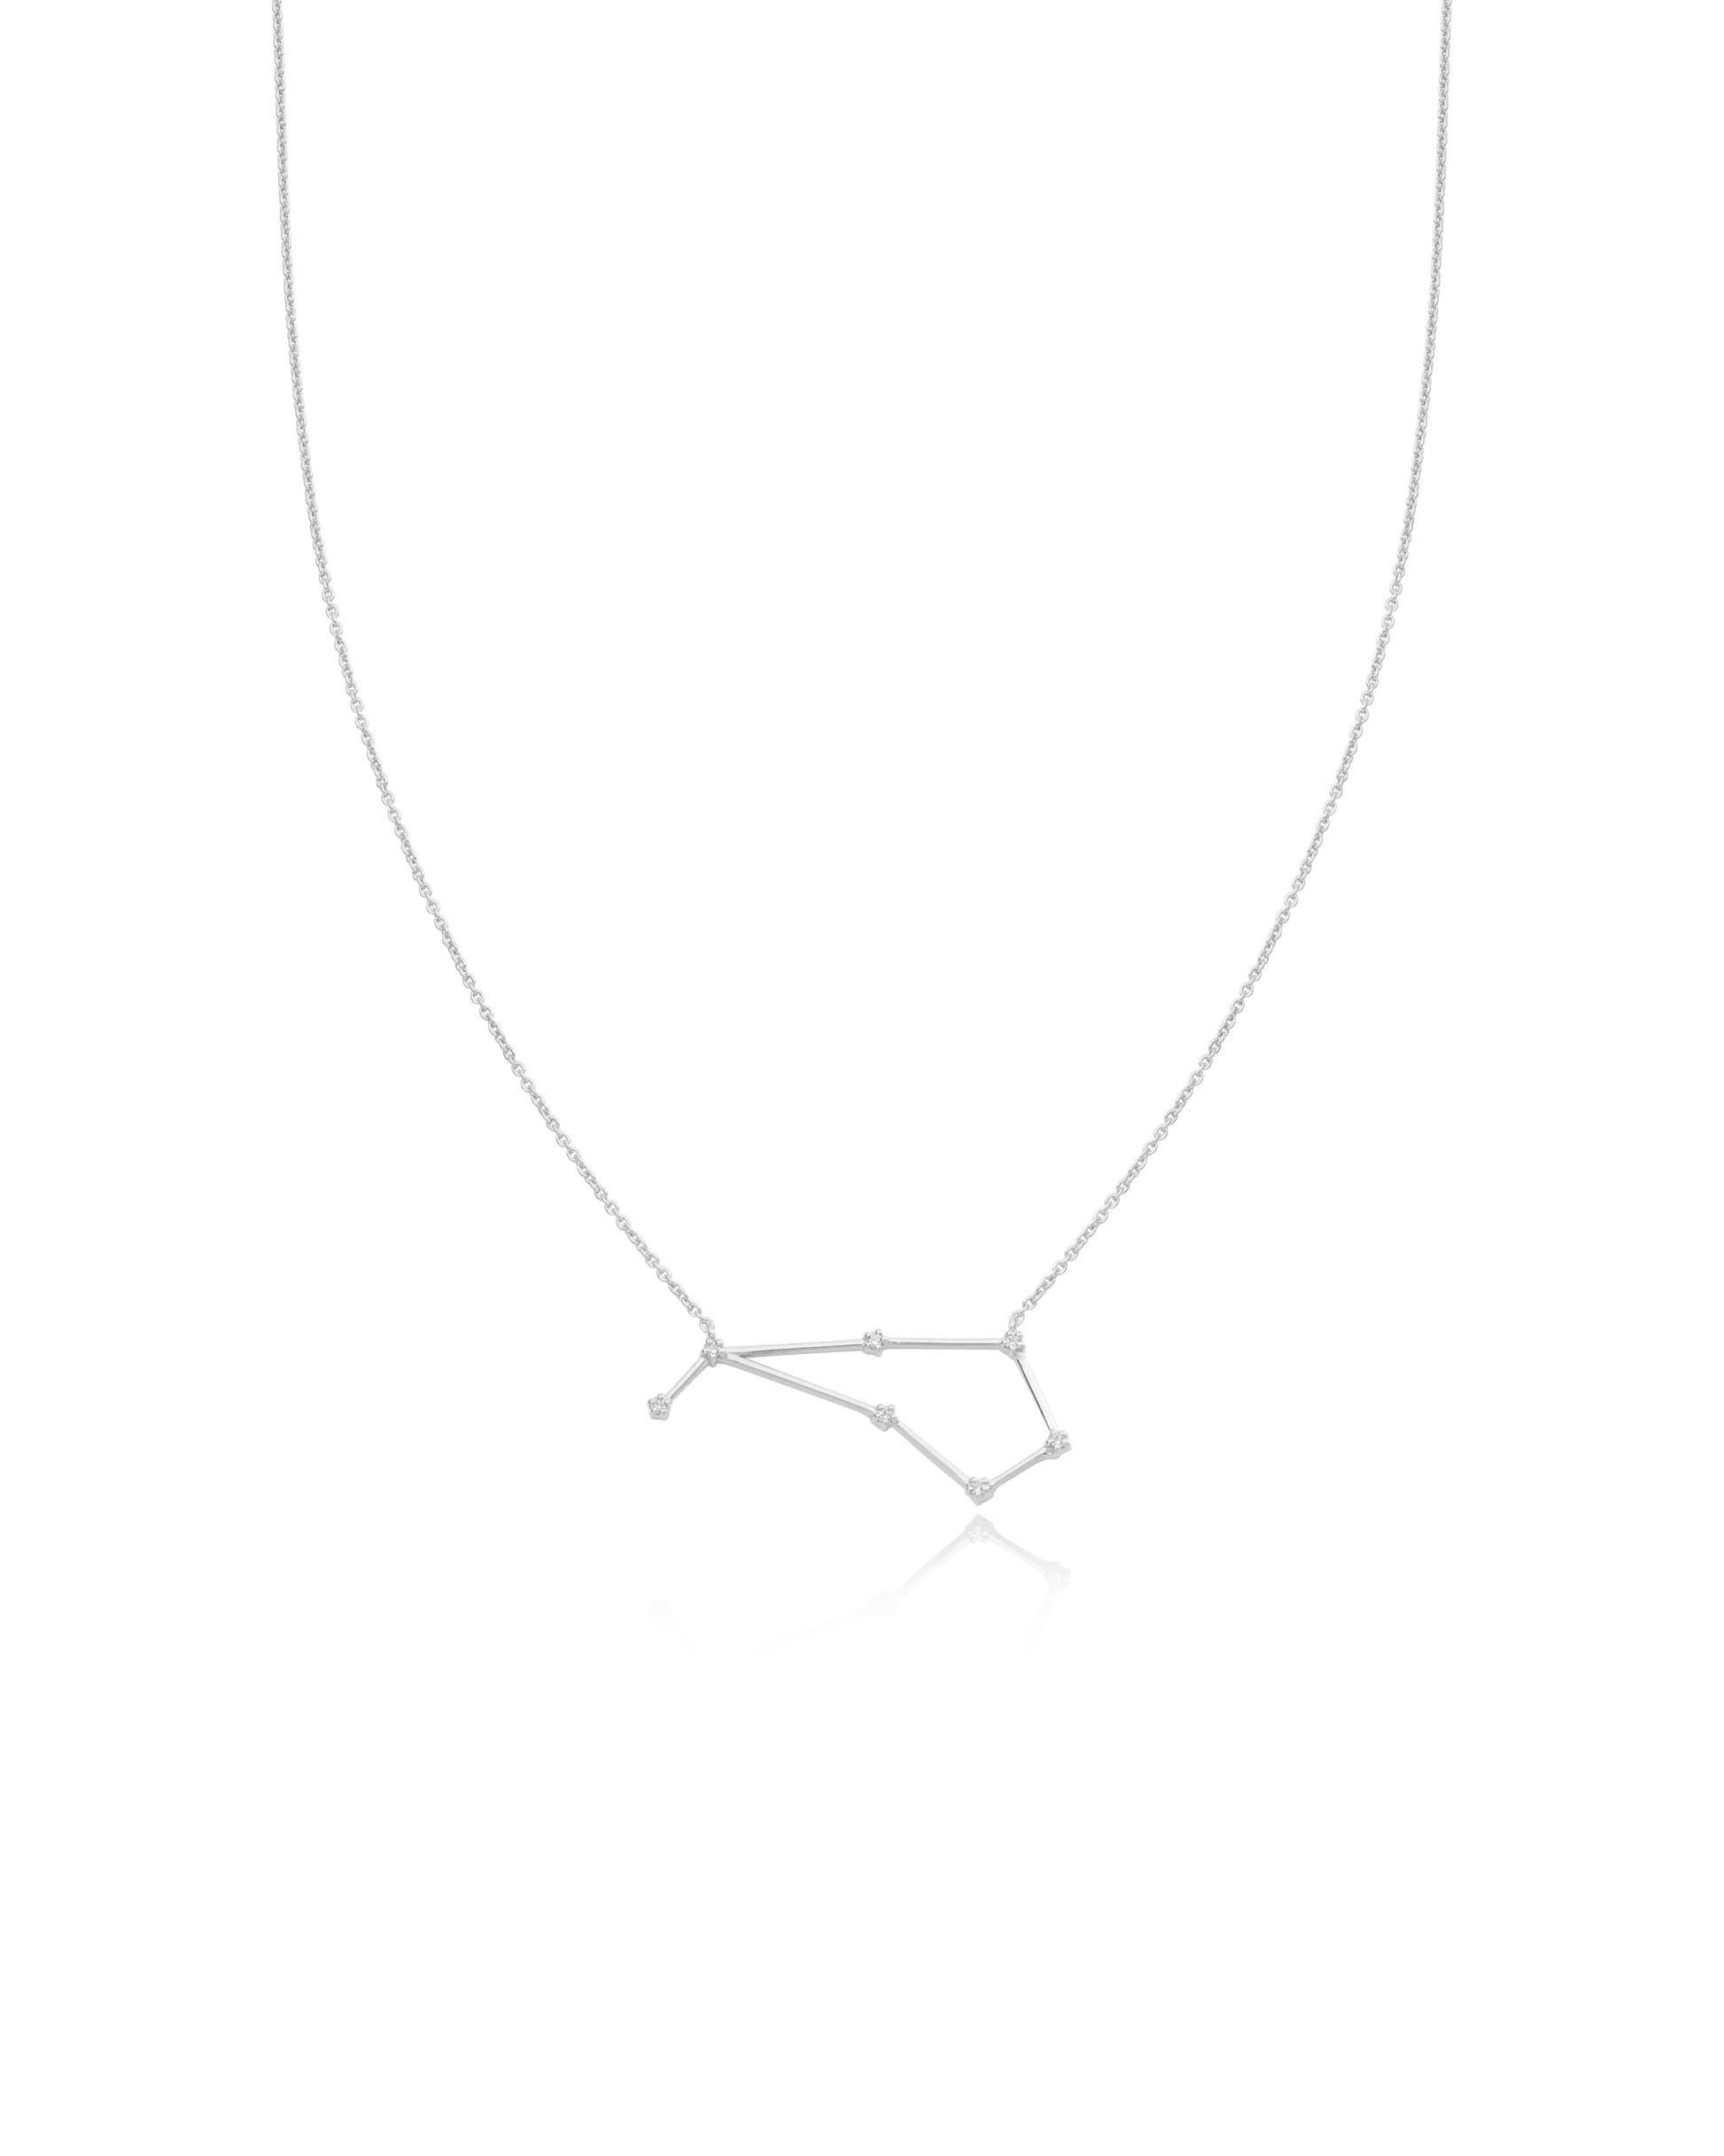 Ursa Major Constellation Necklace - 925 Sterling Silver Necklaces magal-dev Bootes 16" 